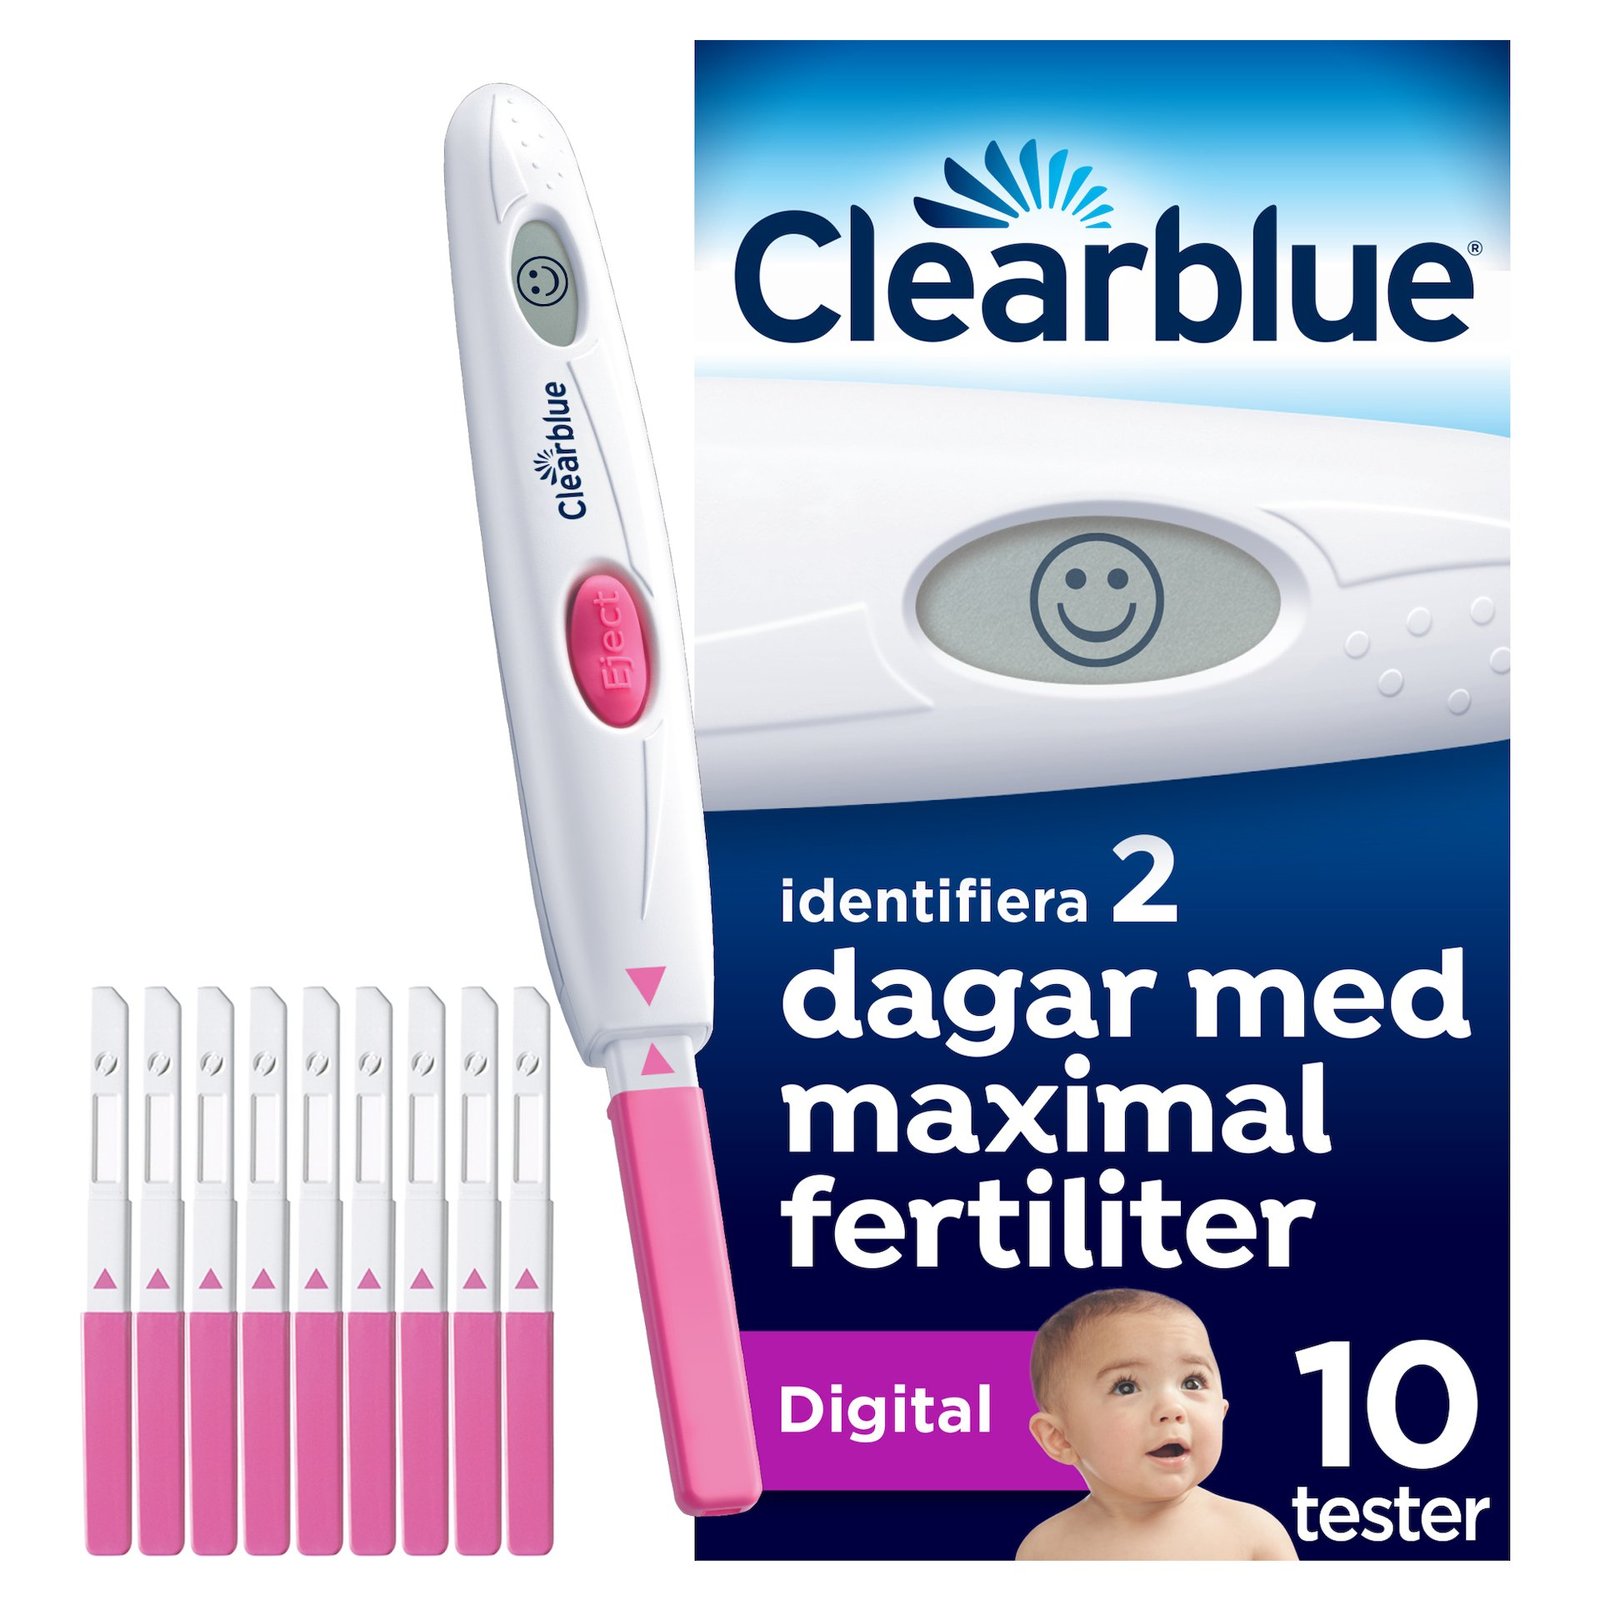 Clearblue Digitalt Ägglossningstest 1 Hållare & 10 tester